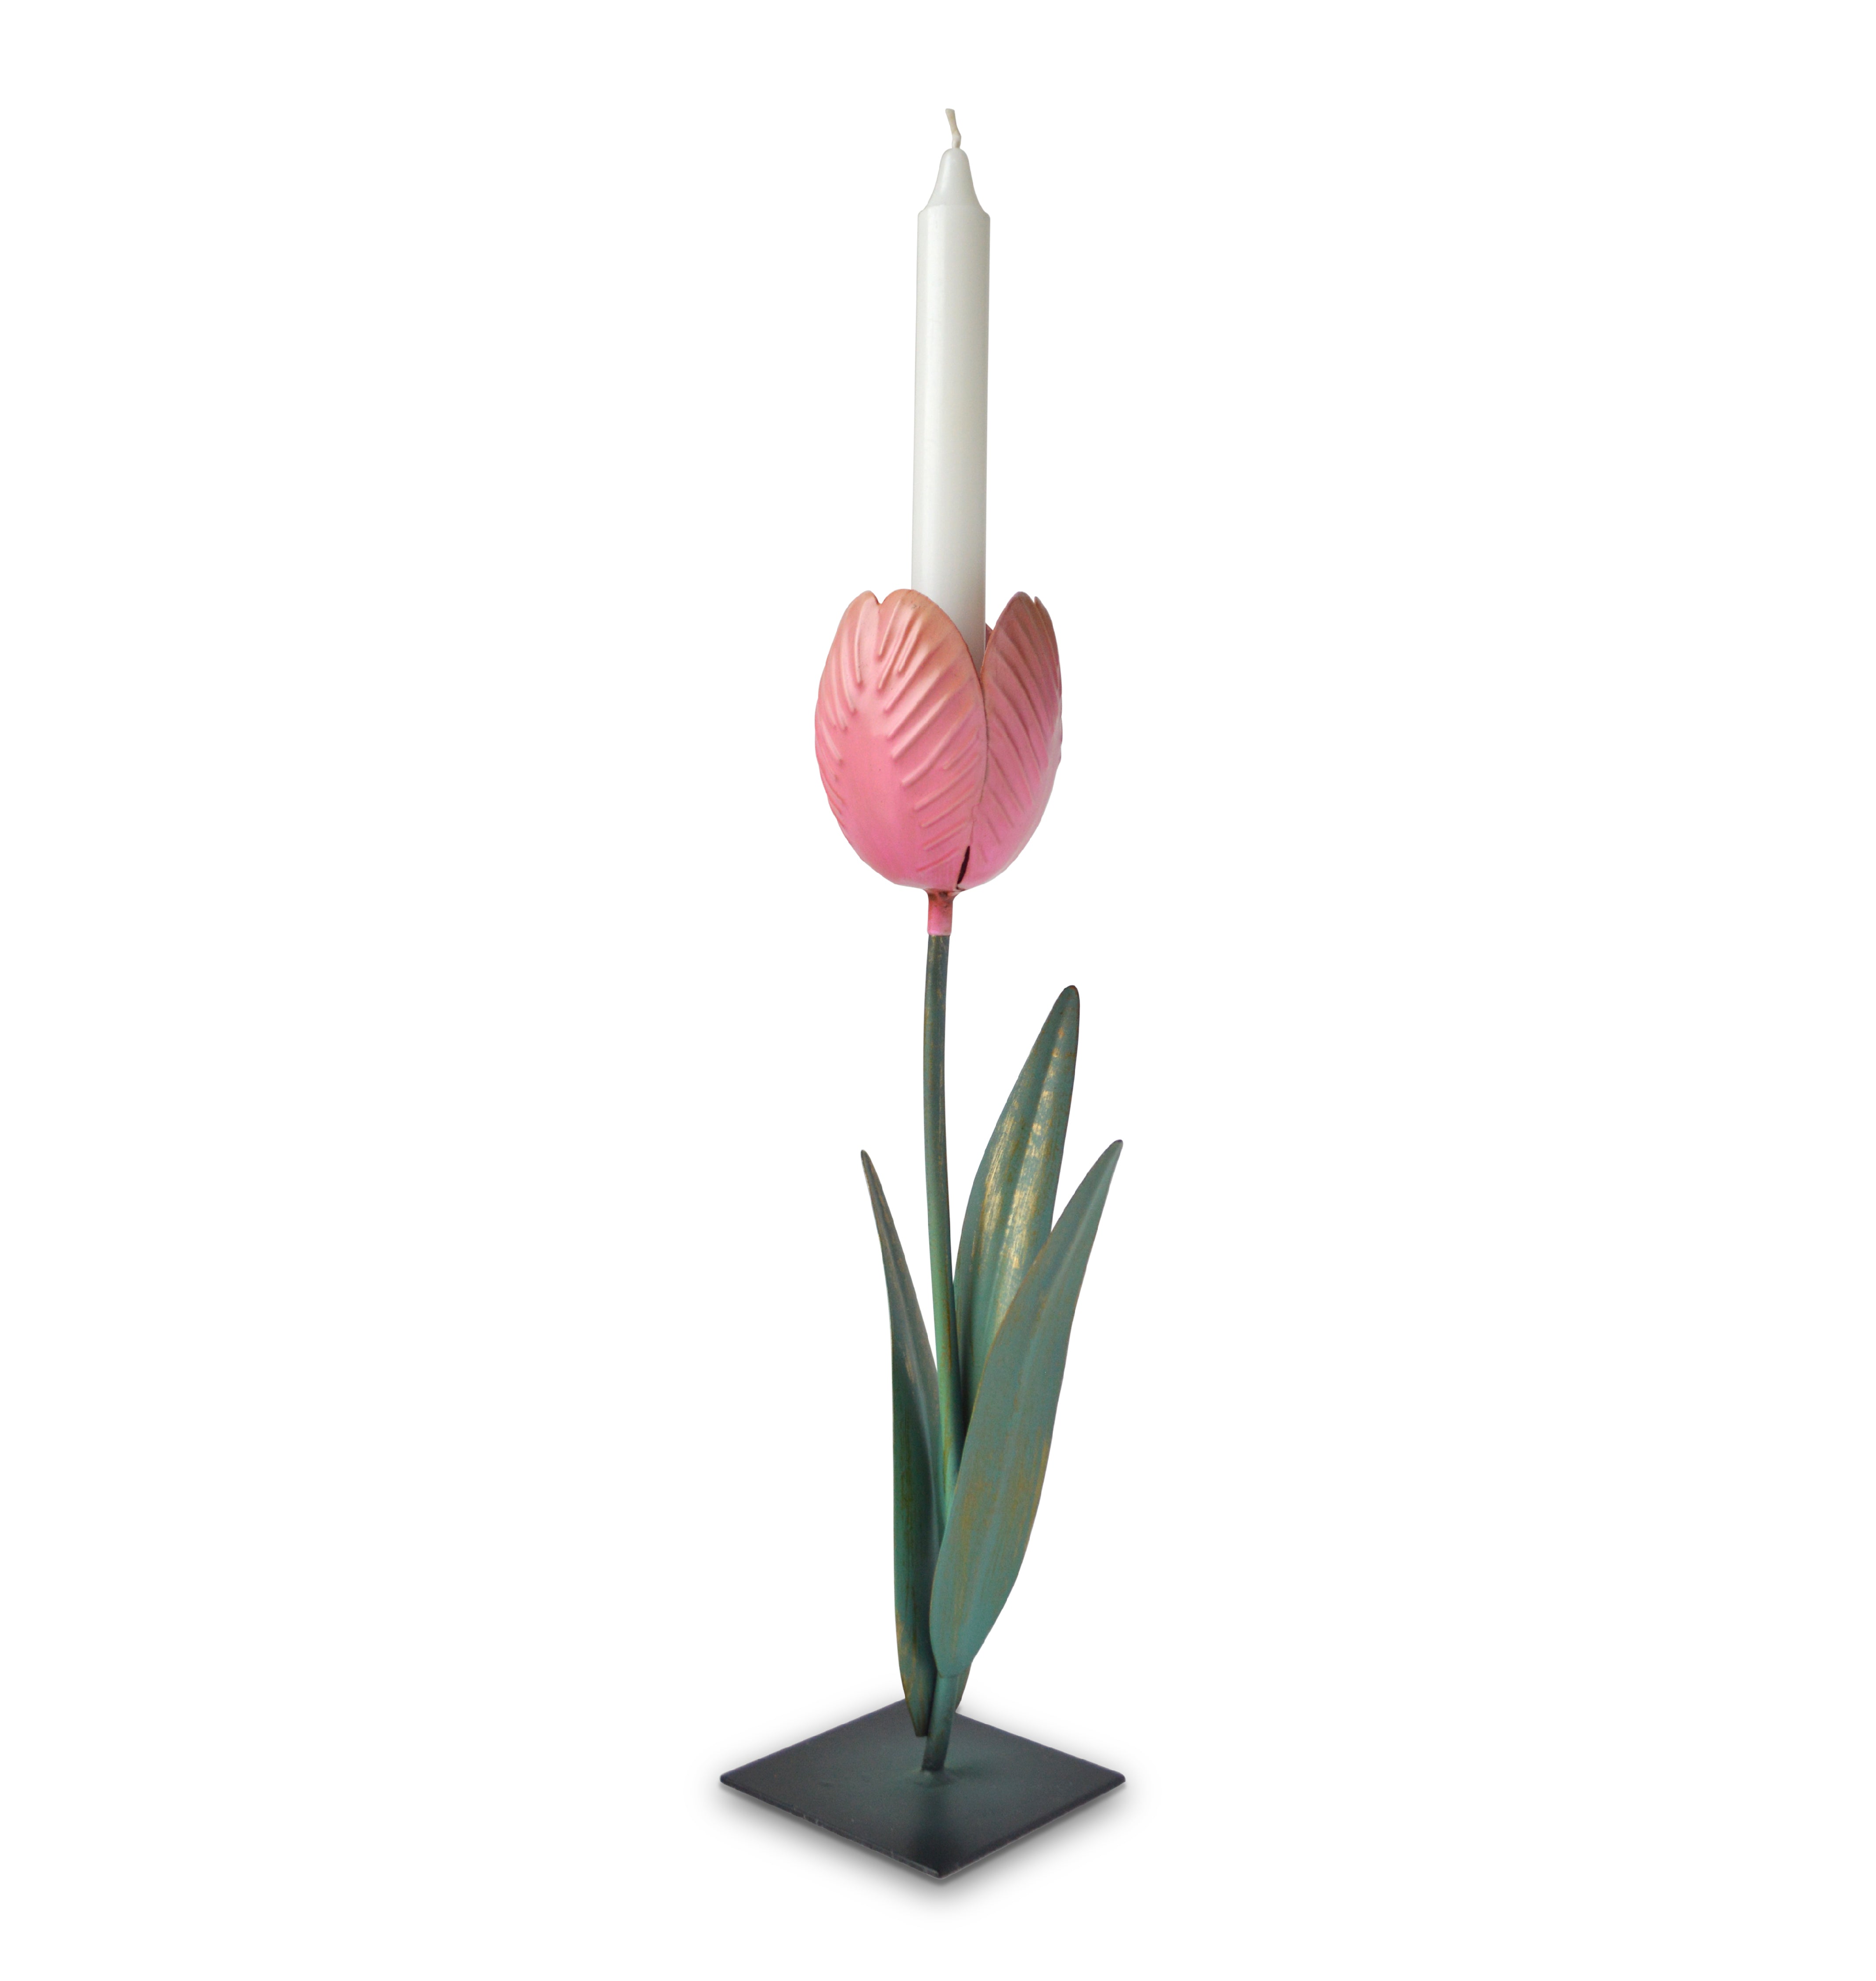 Details about   Tabletop Tulip Incense Burner Candle Holder Tealight Holder Party Supplies 